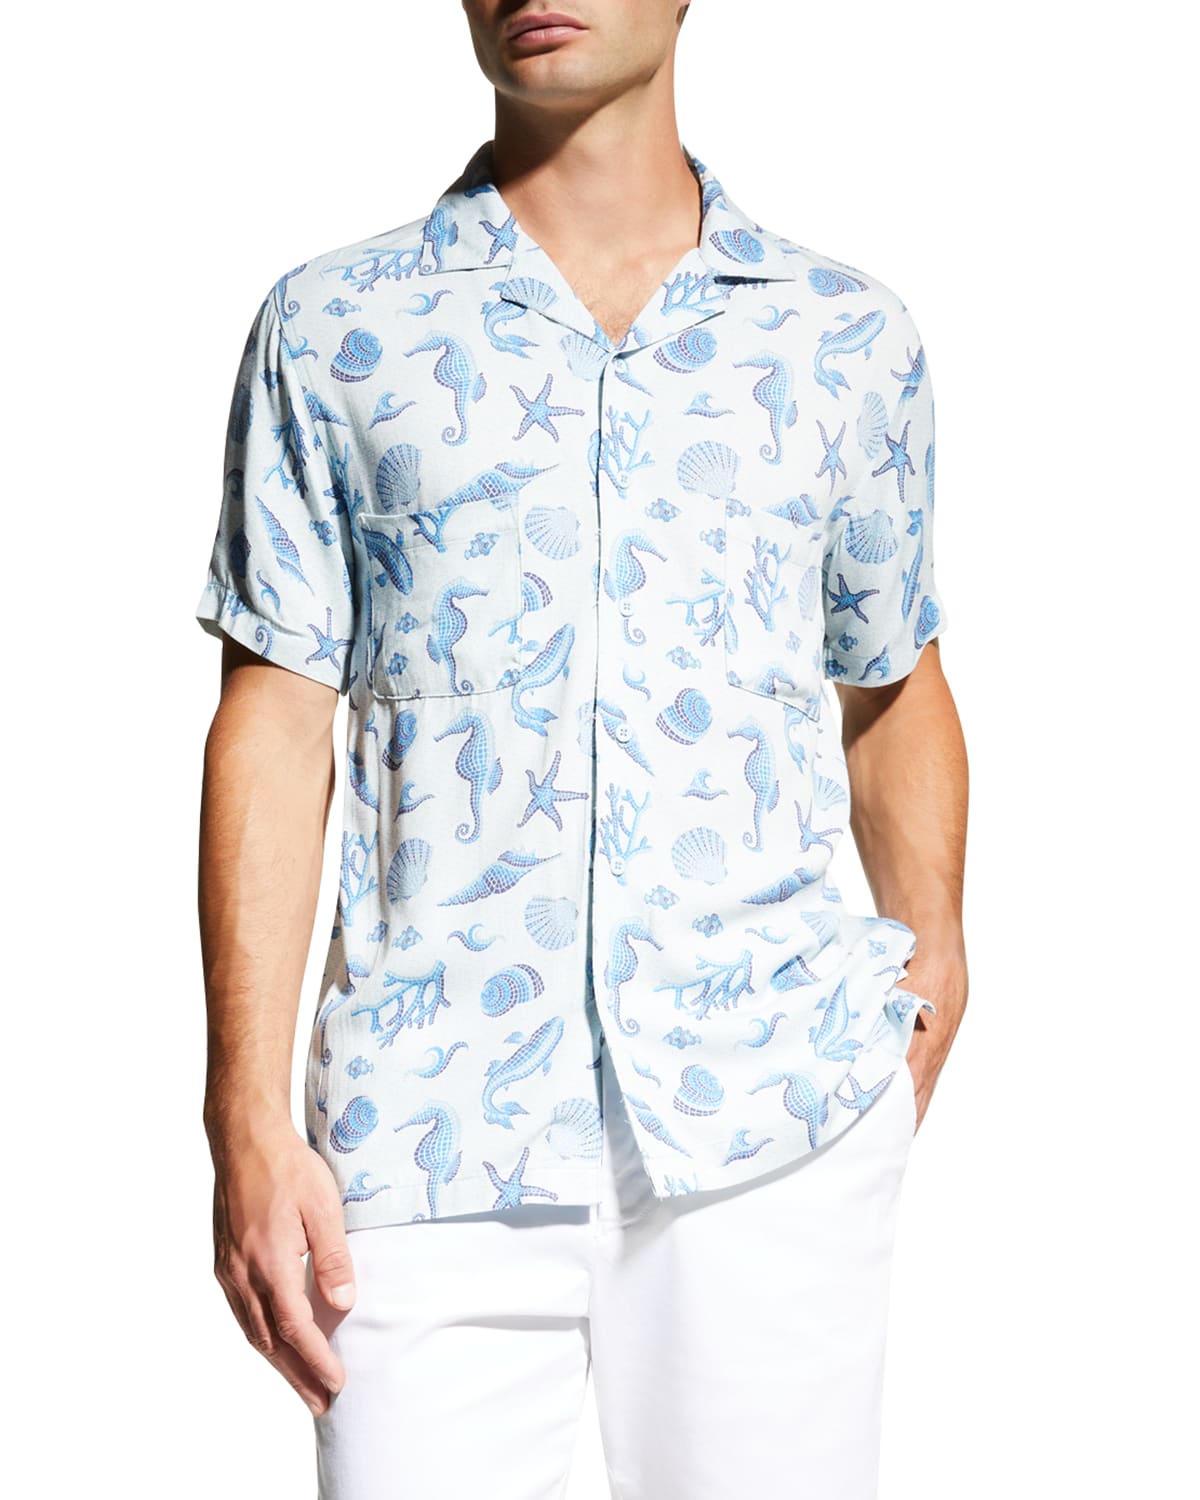 Onia Men's Vacation Short-Sleeve Shirt